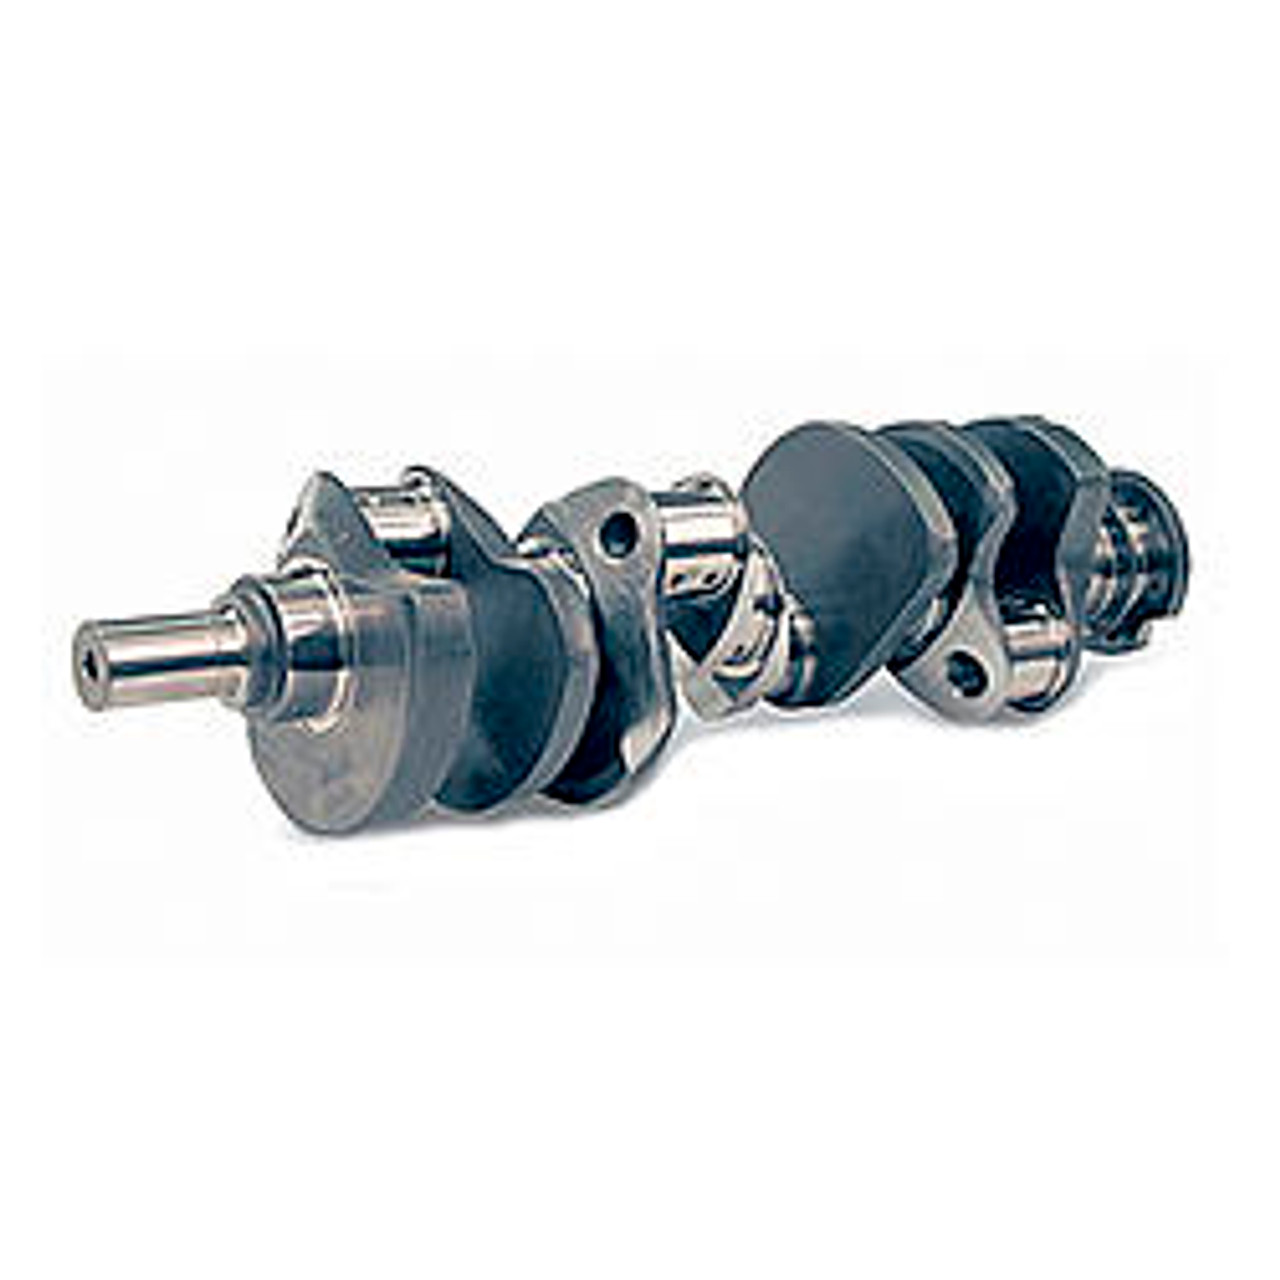 Scat SBC Cast Steel Crank - 3.480 Stroke - SCA9-350-3480-5700